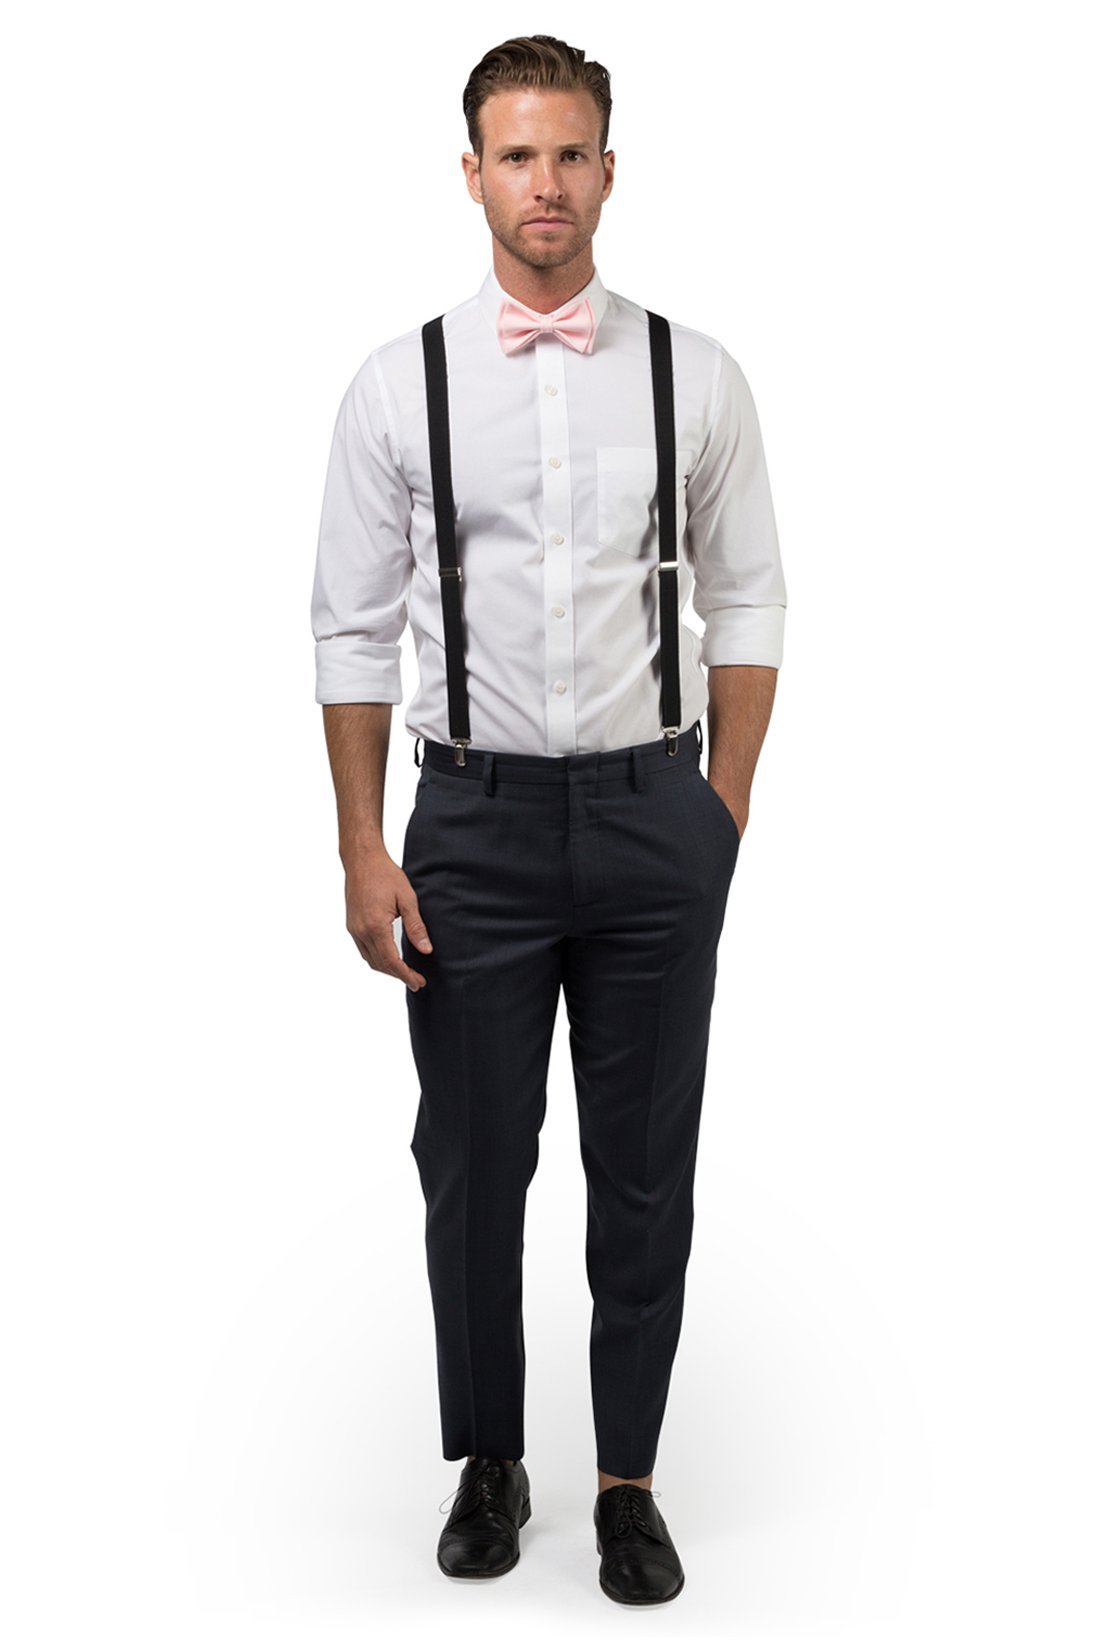 Black Suspenders & Blush Bow Tie